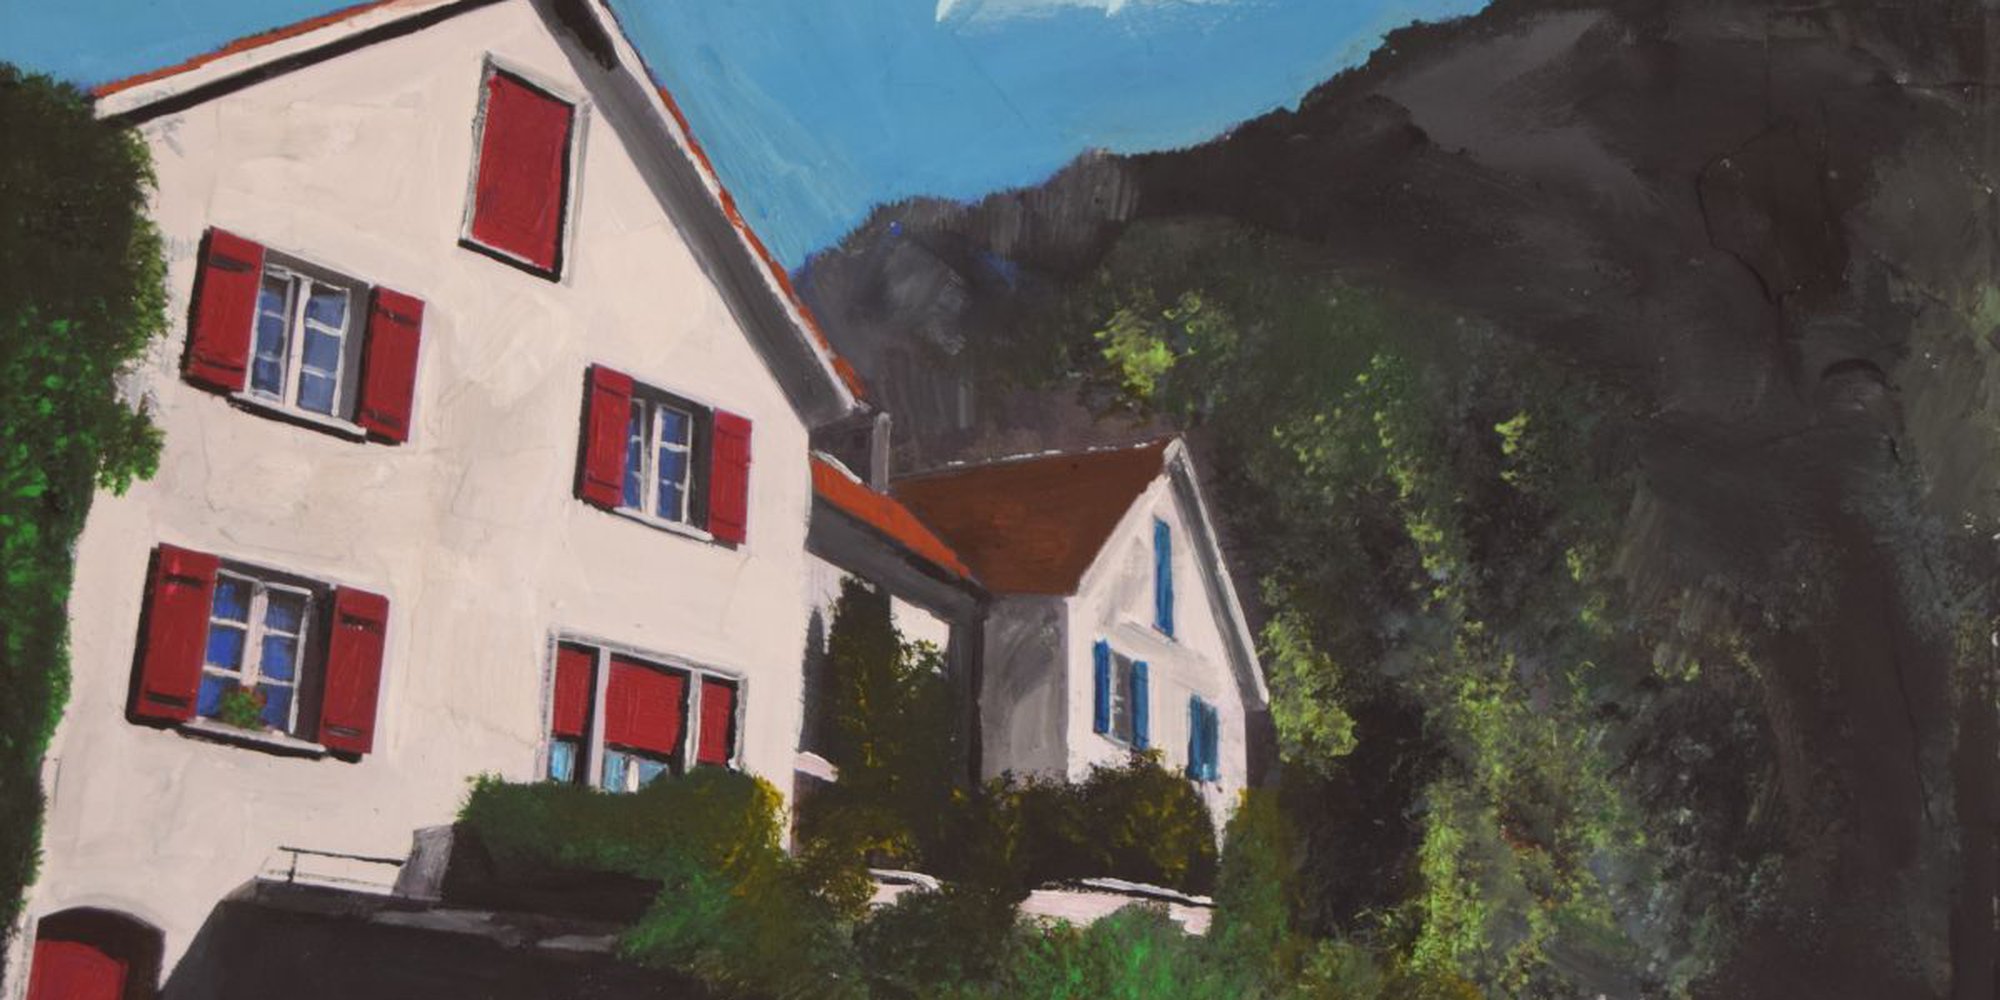 Art of the Day: "Lichtenstein, Houses, 2016" by Andrew  Reid Wildman